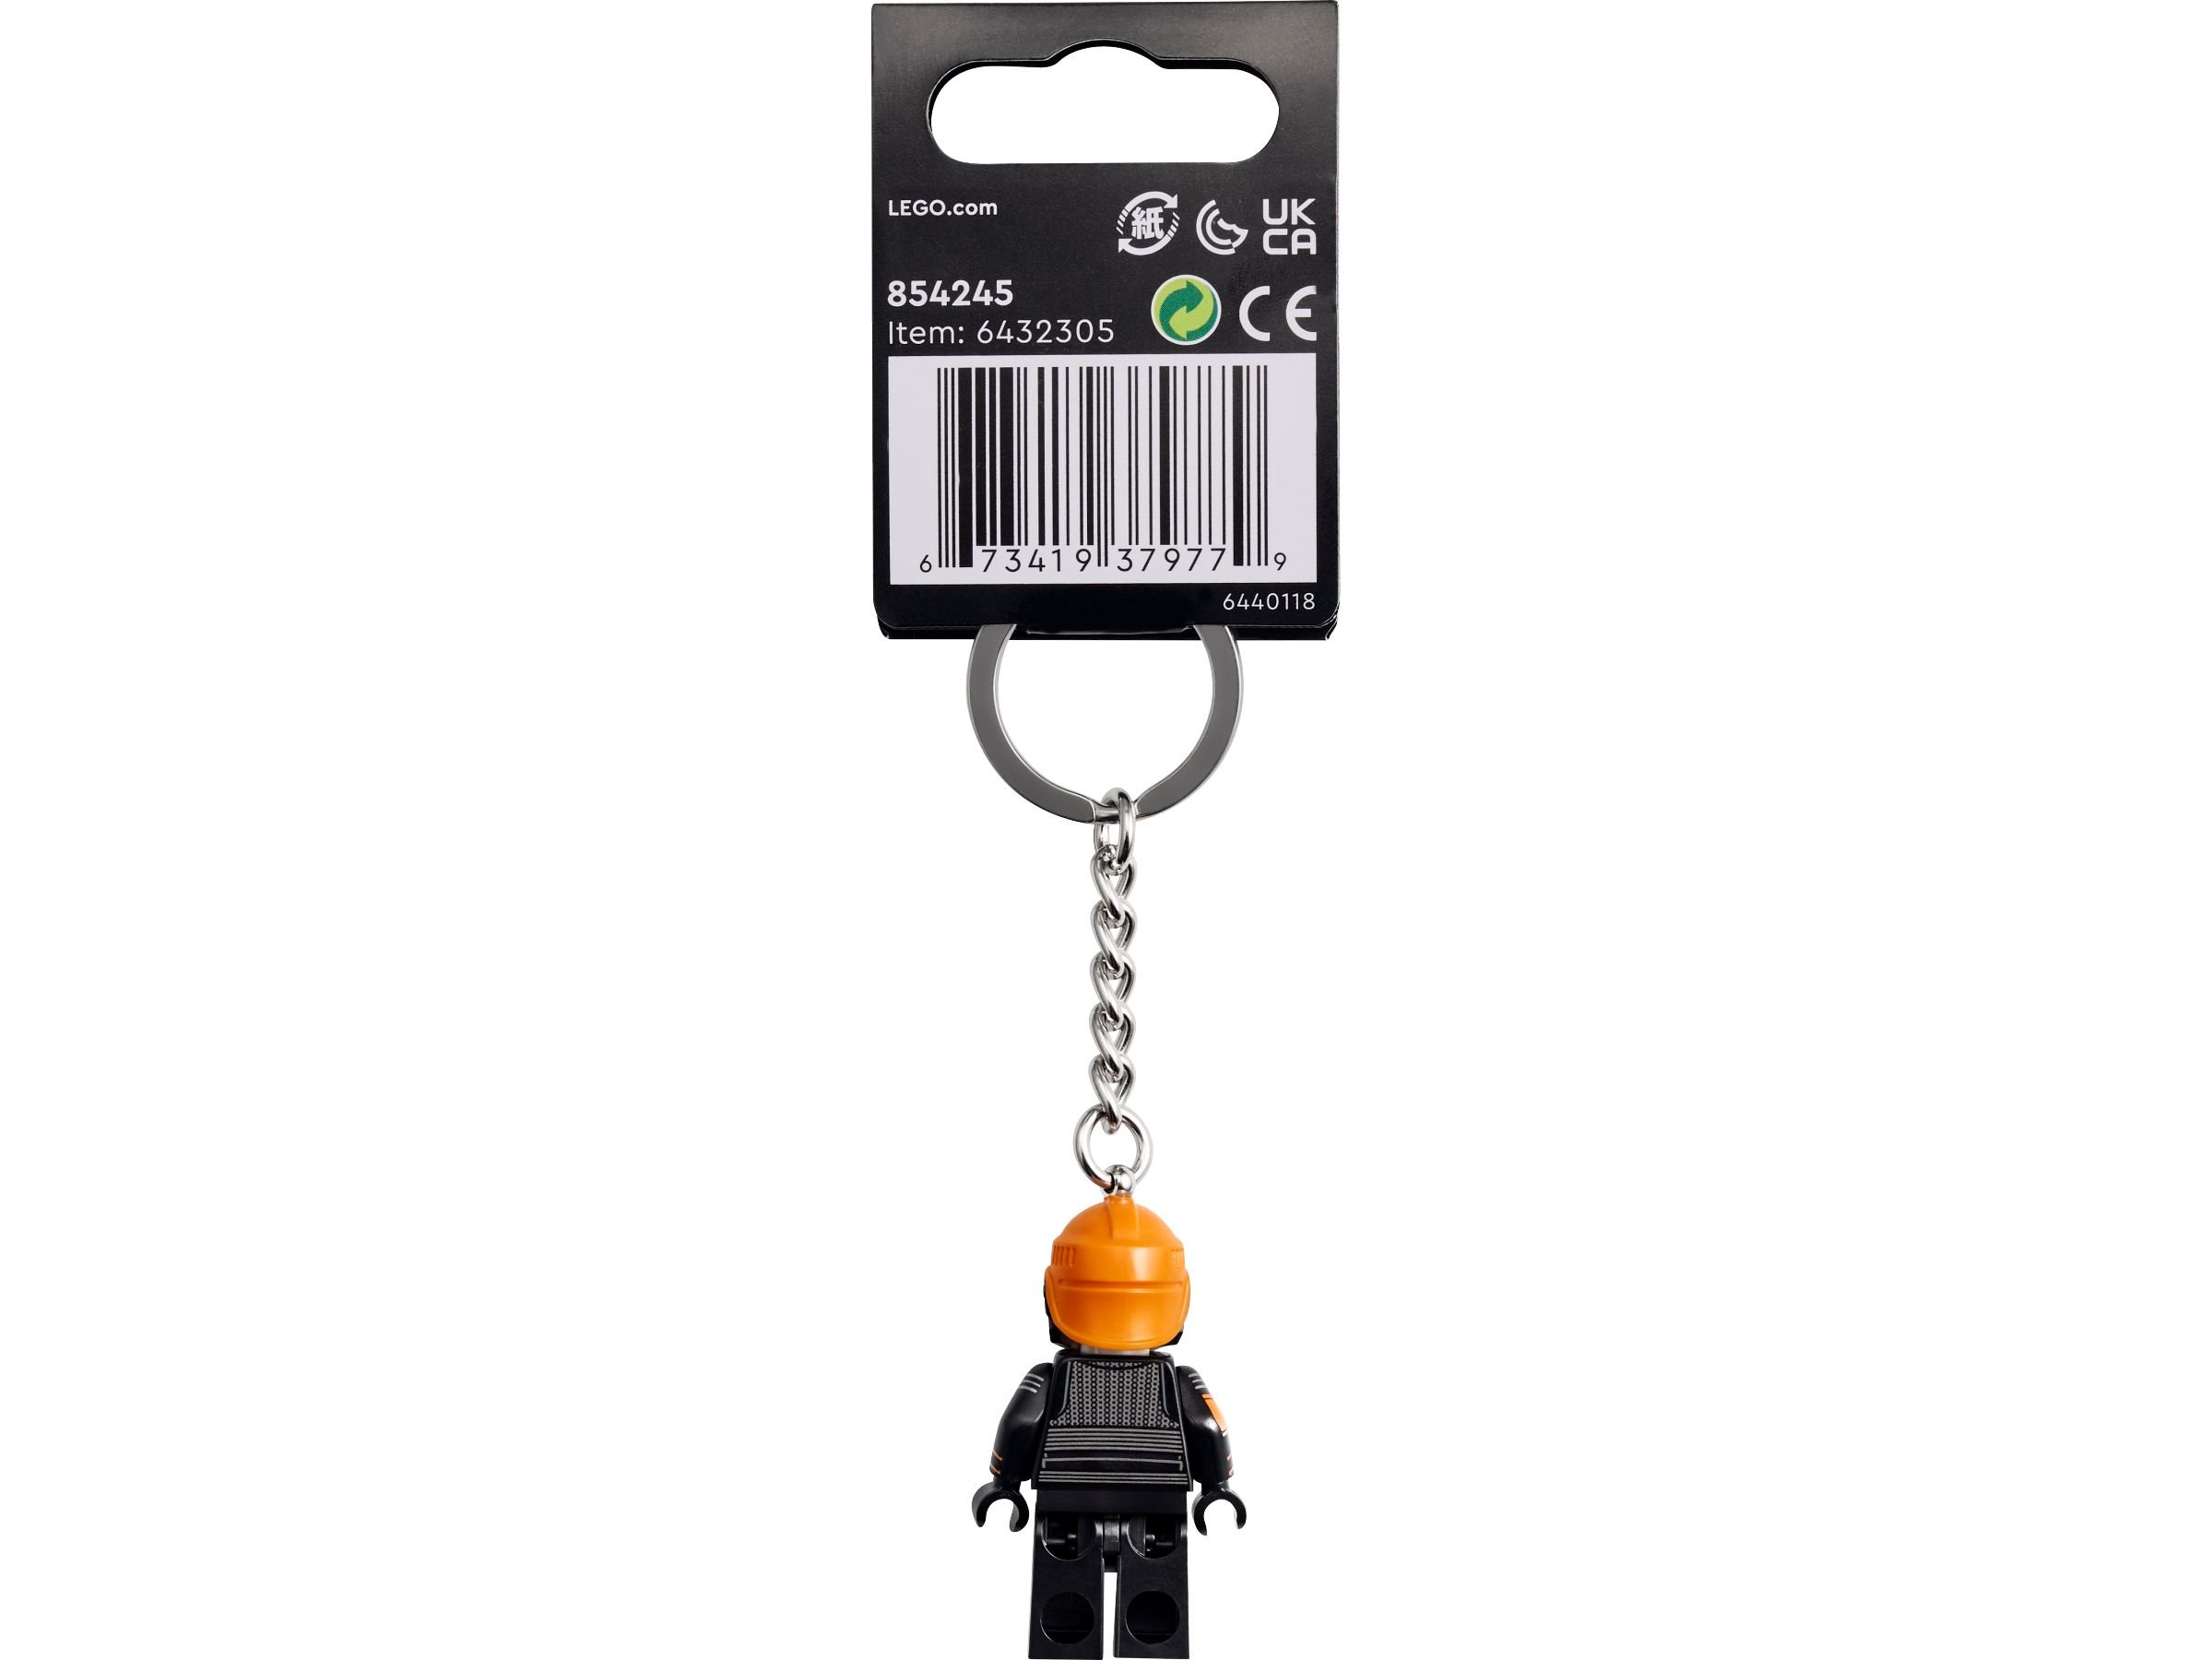 LEGO Gear 854245 Fennec Shand™ Schlüsselanhänger LEGO_854245_alt2.jpg